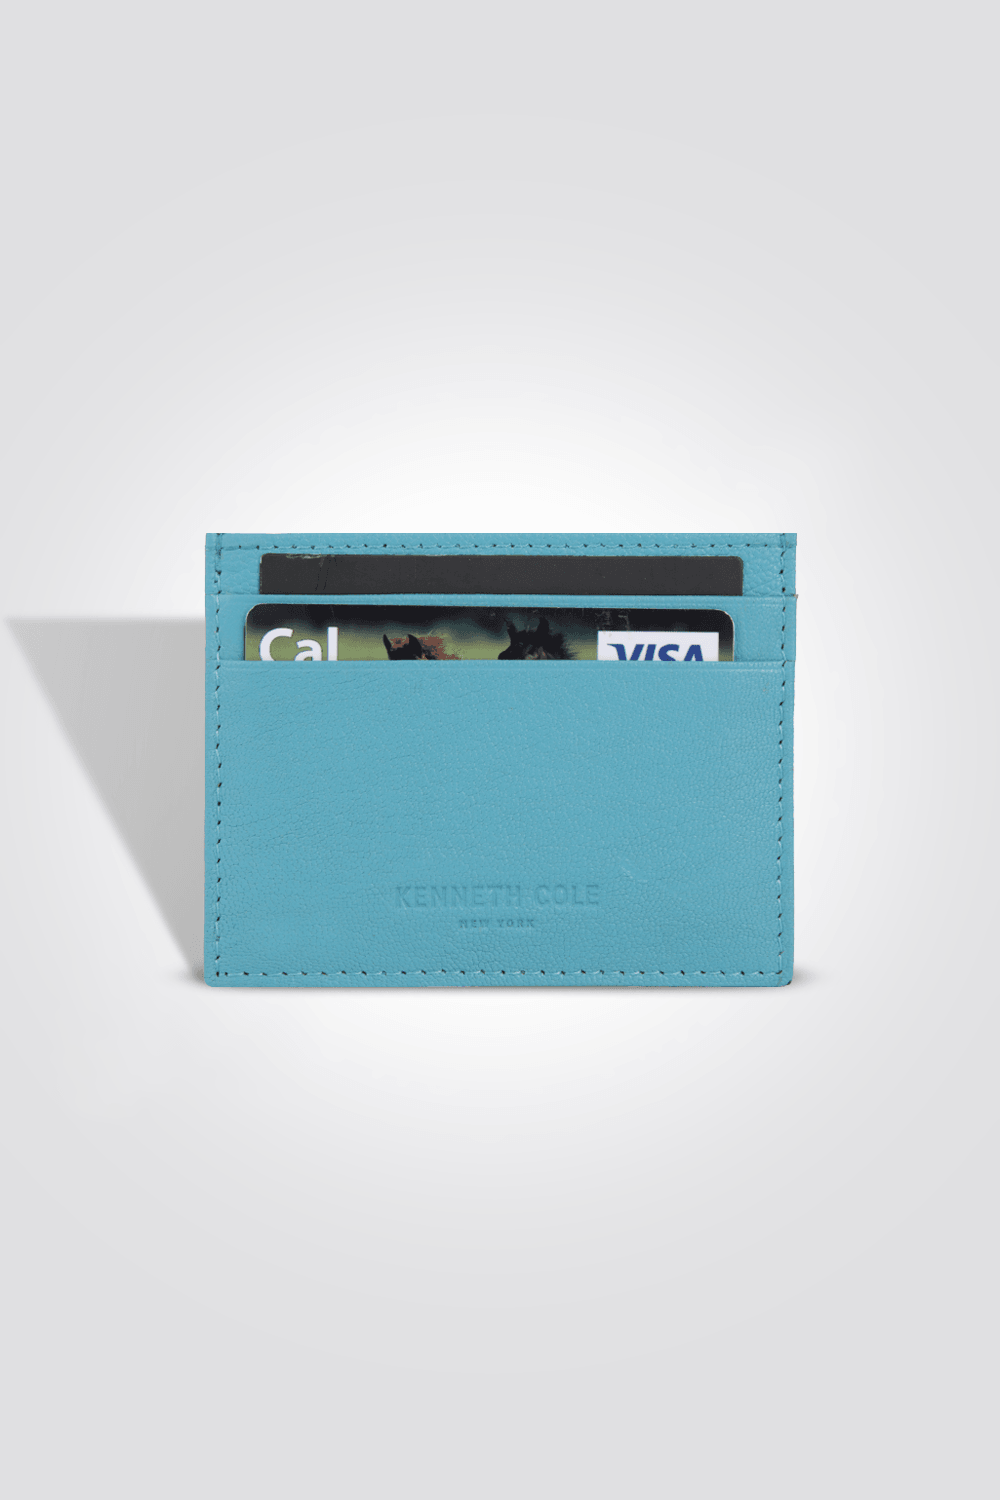 KENNETH COLE - ארנק אשראי עור בצבע תכלת - MASHBIR//365